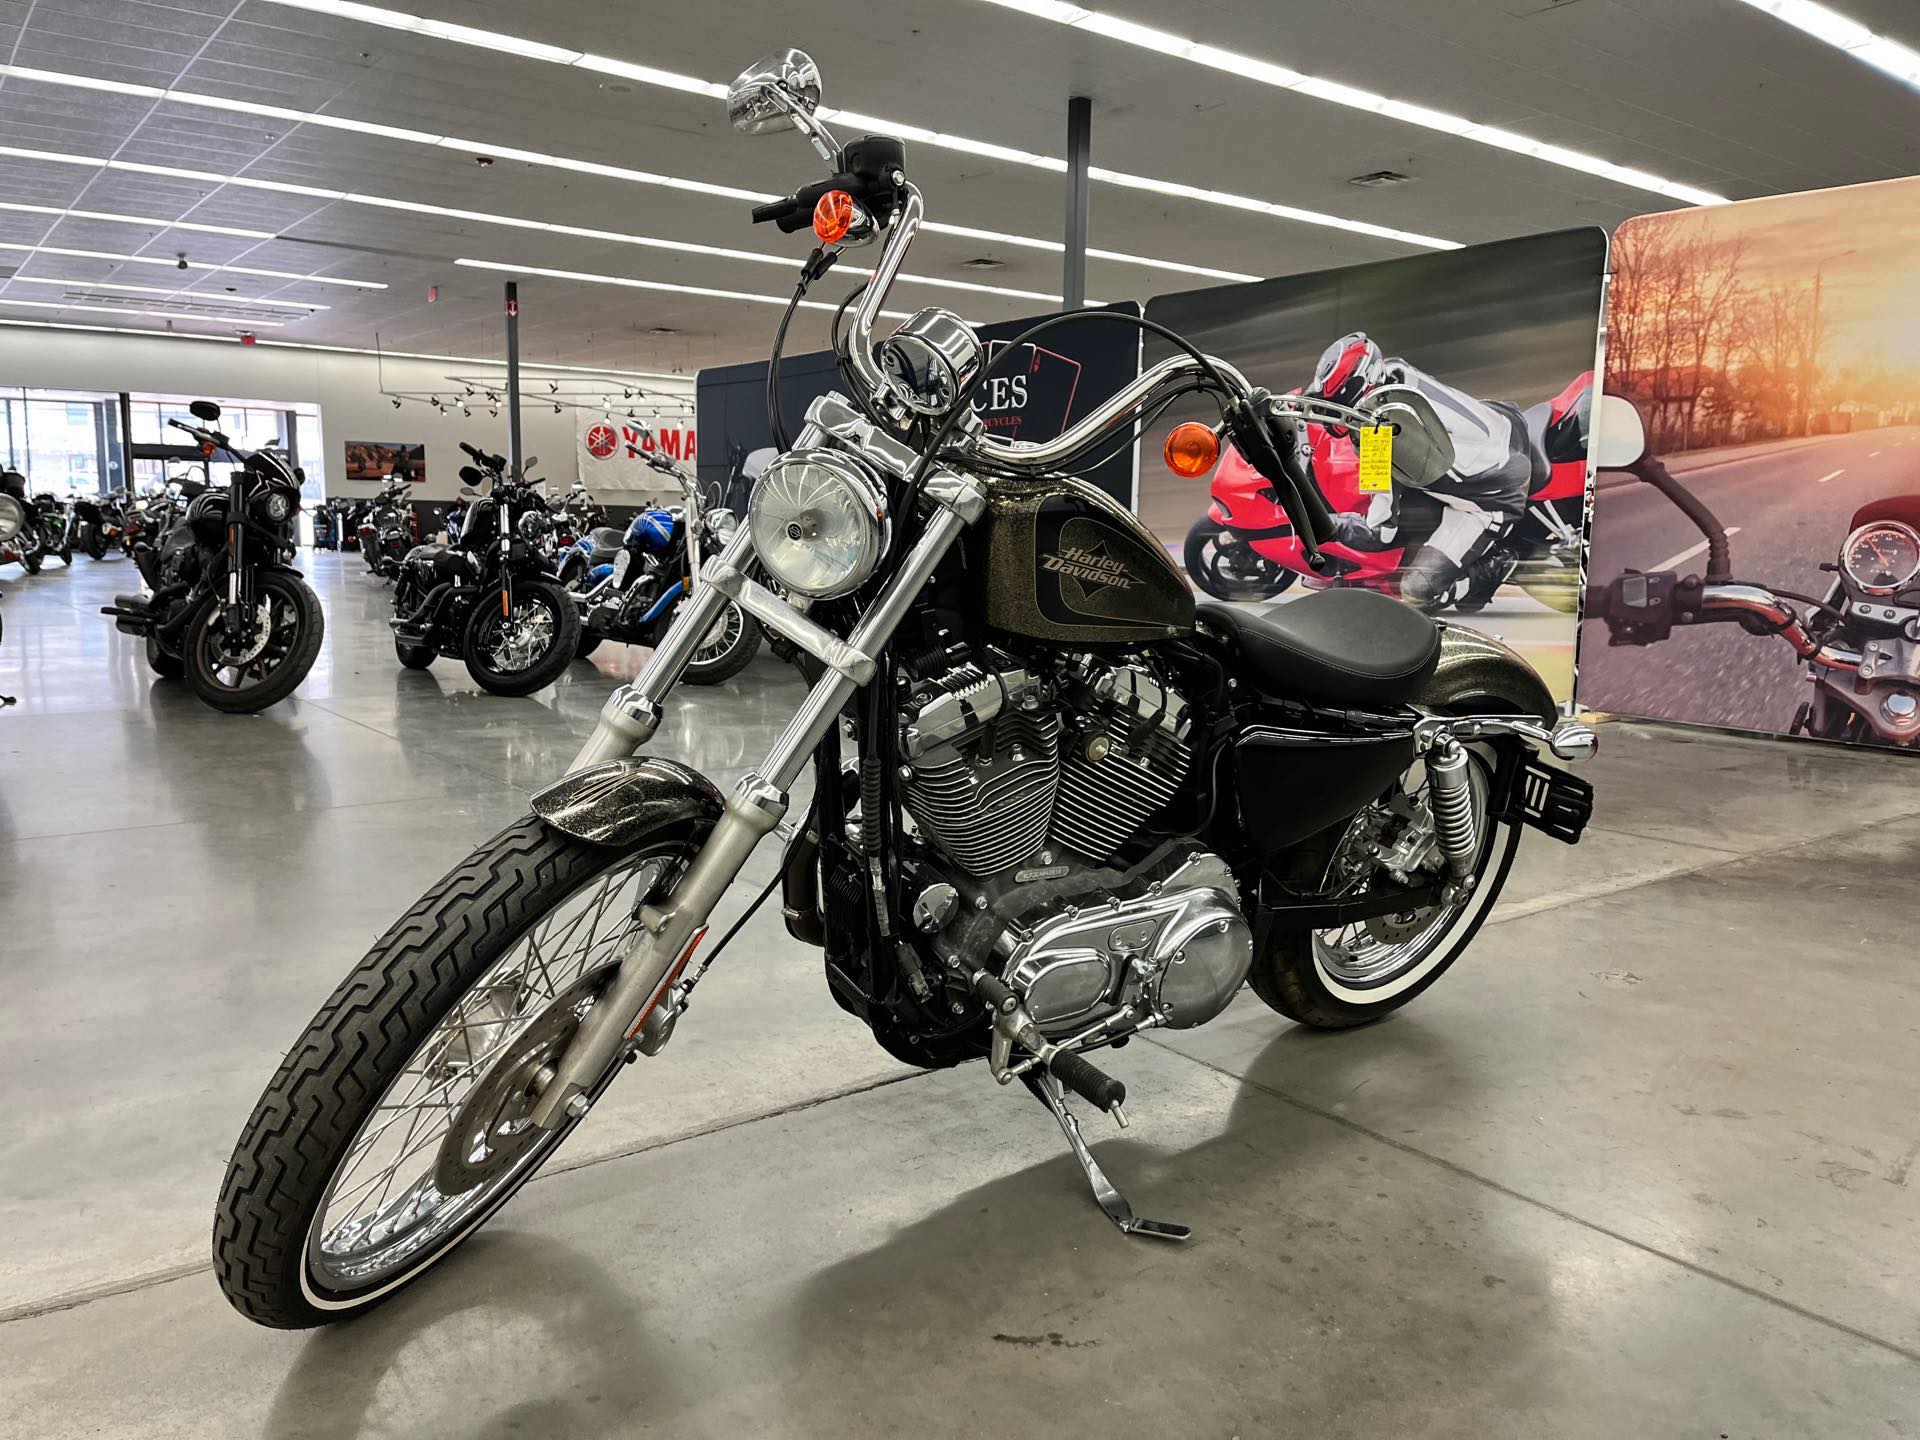 2016 Harley-Davidson Sportster Seventy-Two at Aces Motorcycles - Denver